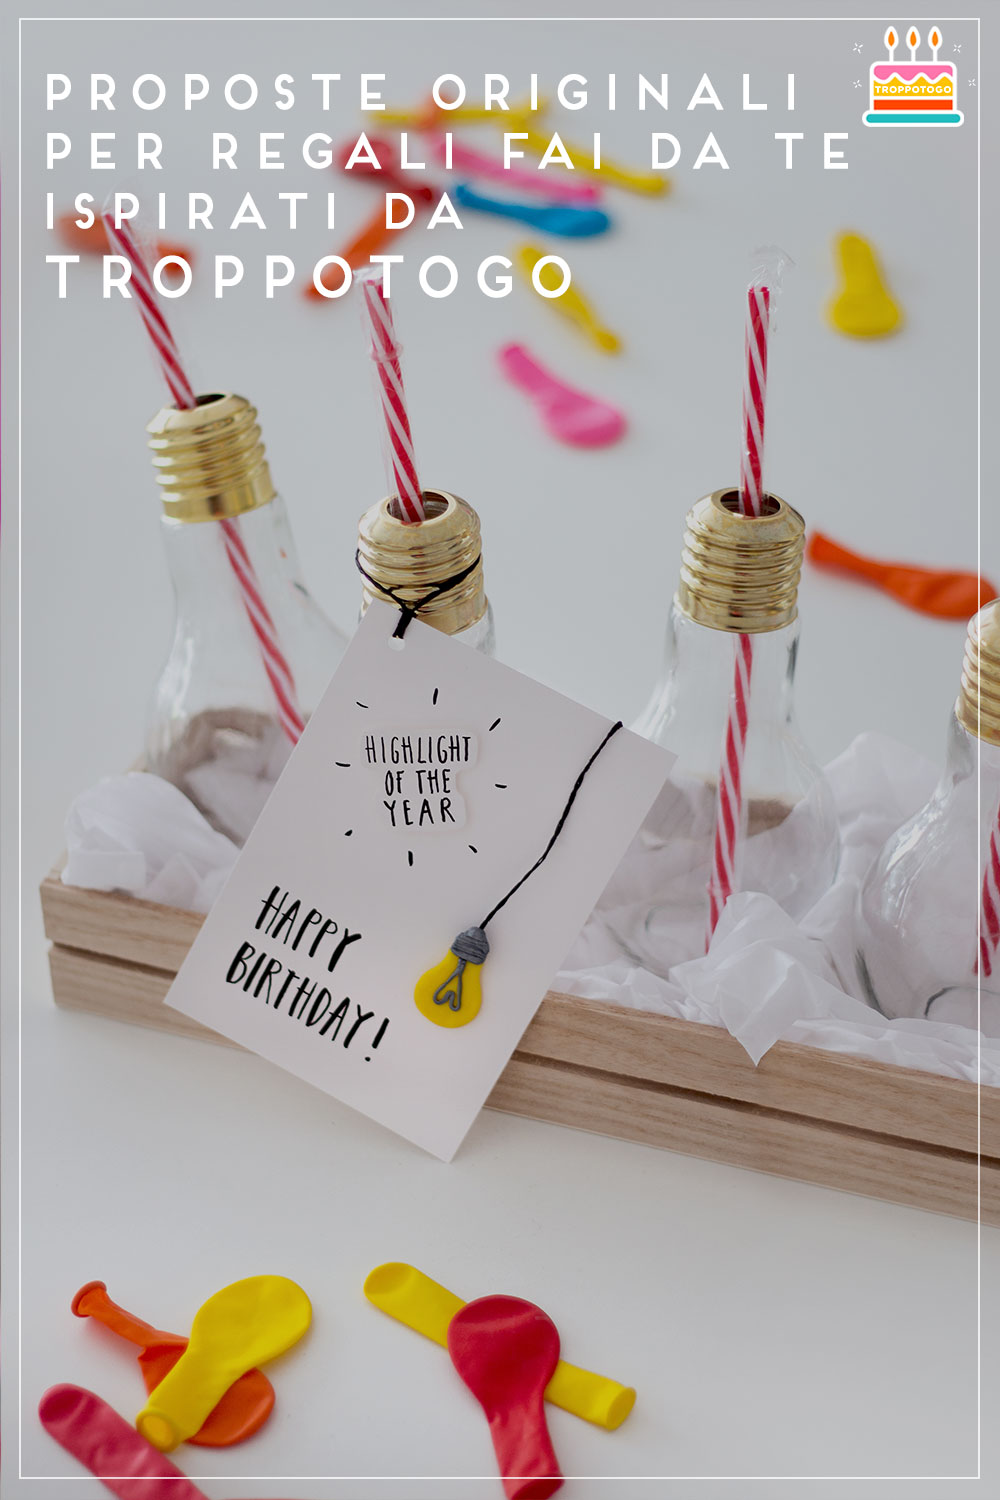 Idee originali per regali fai da te ispirati da Troppotogo!